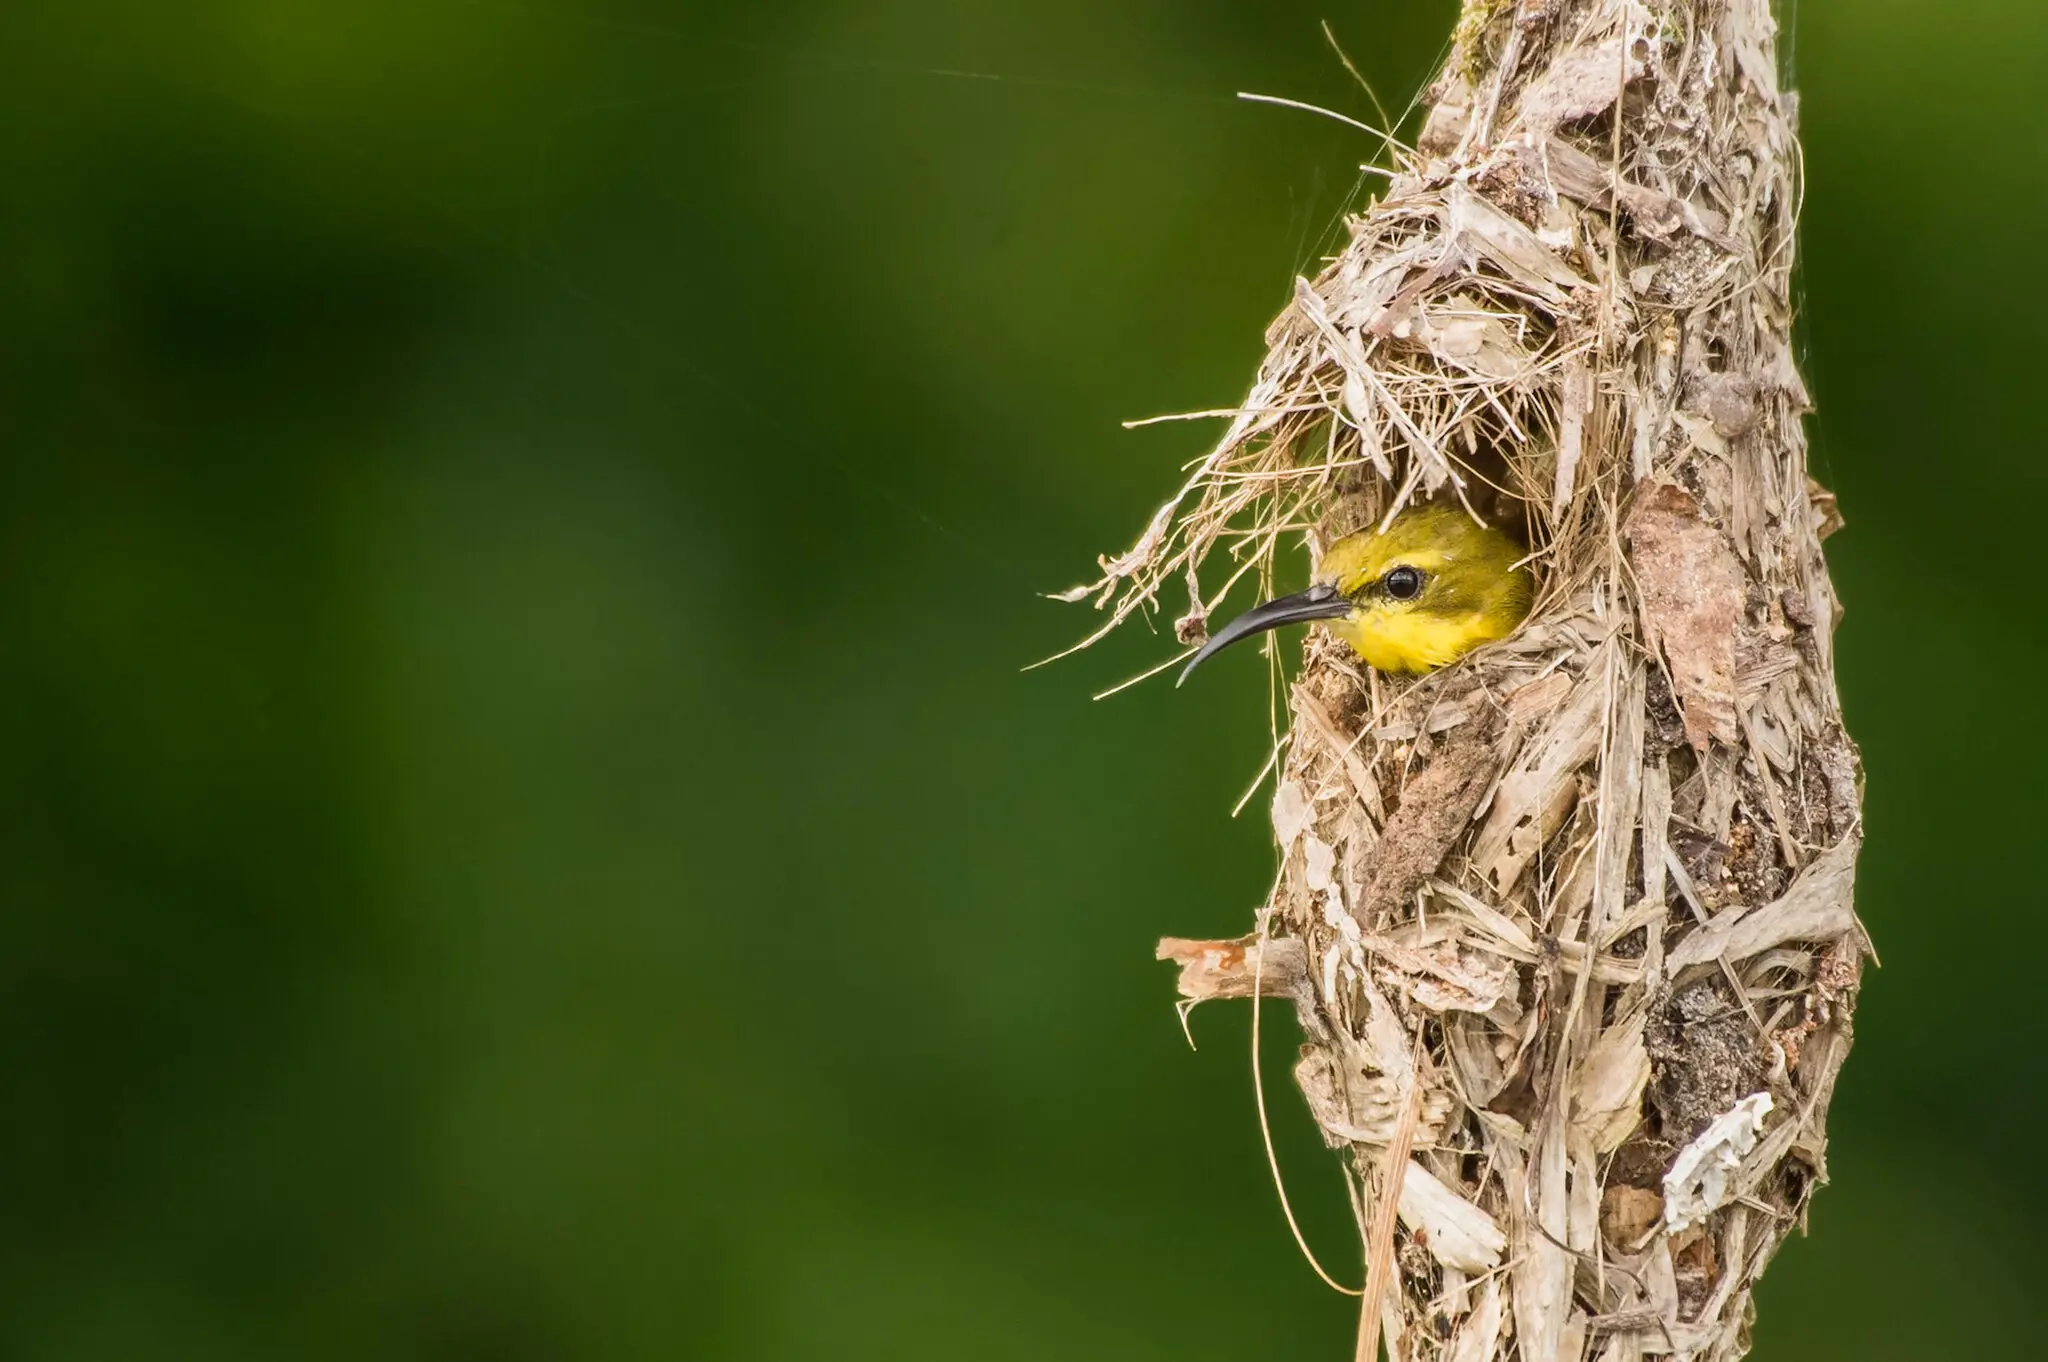 Olive-backed sunbird inside its snug, domed nest.